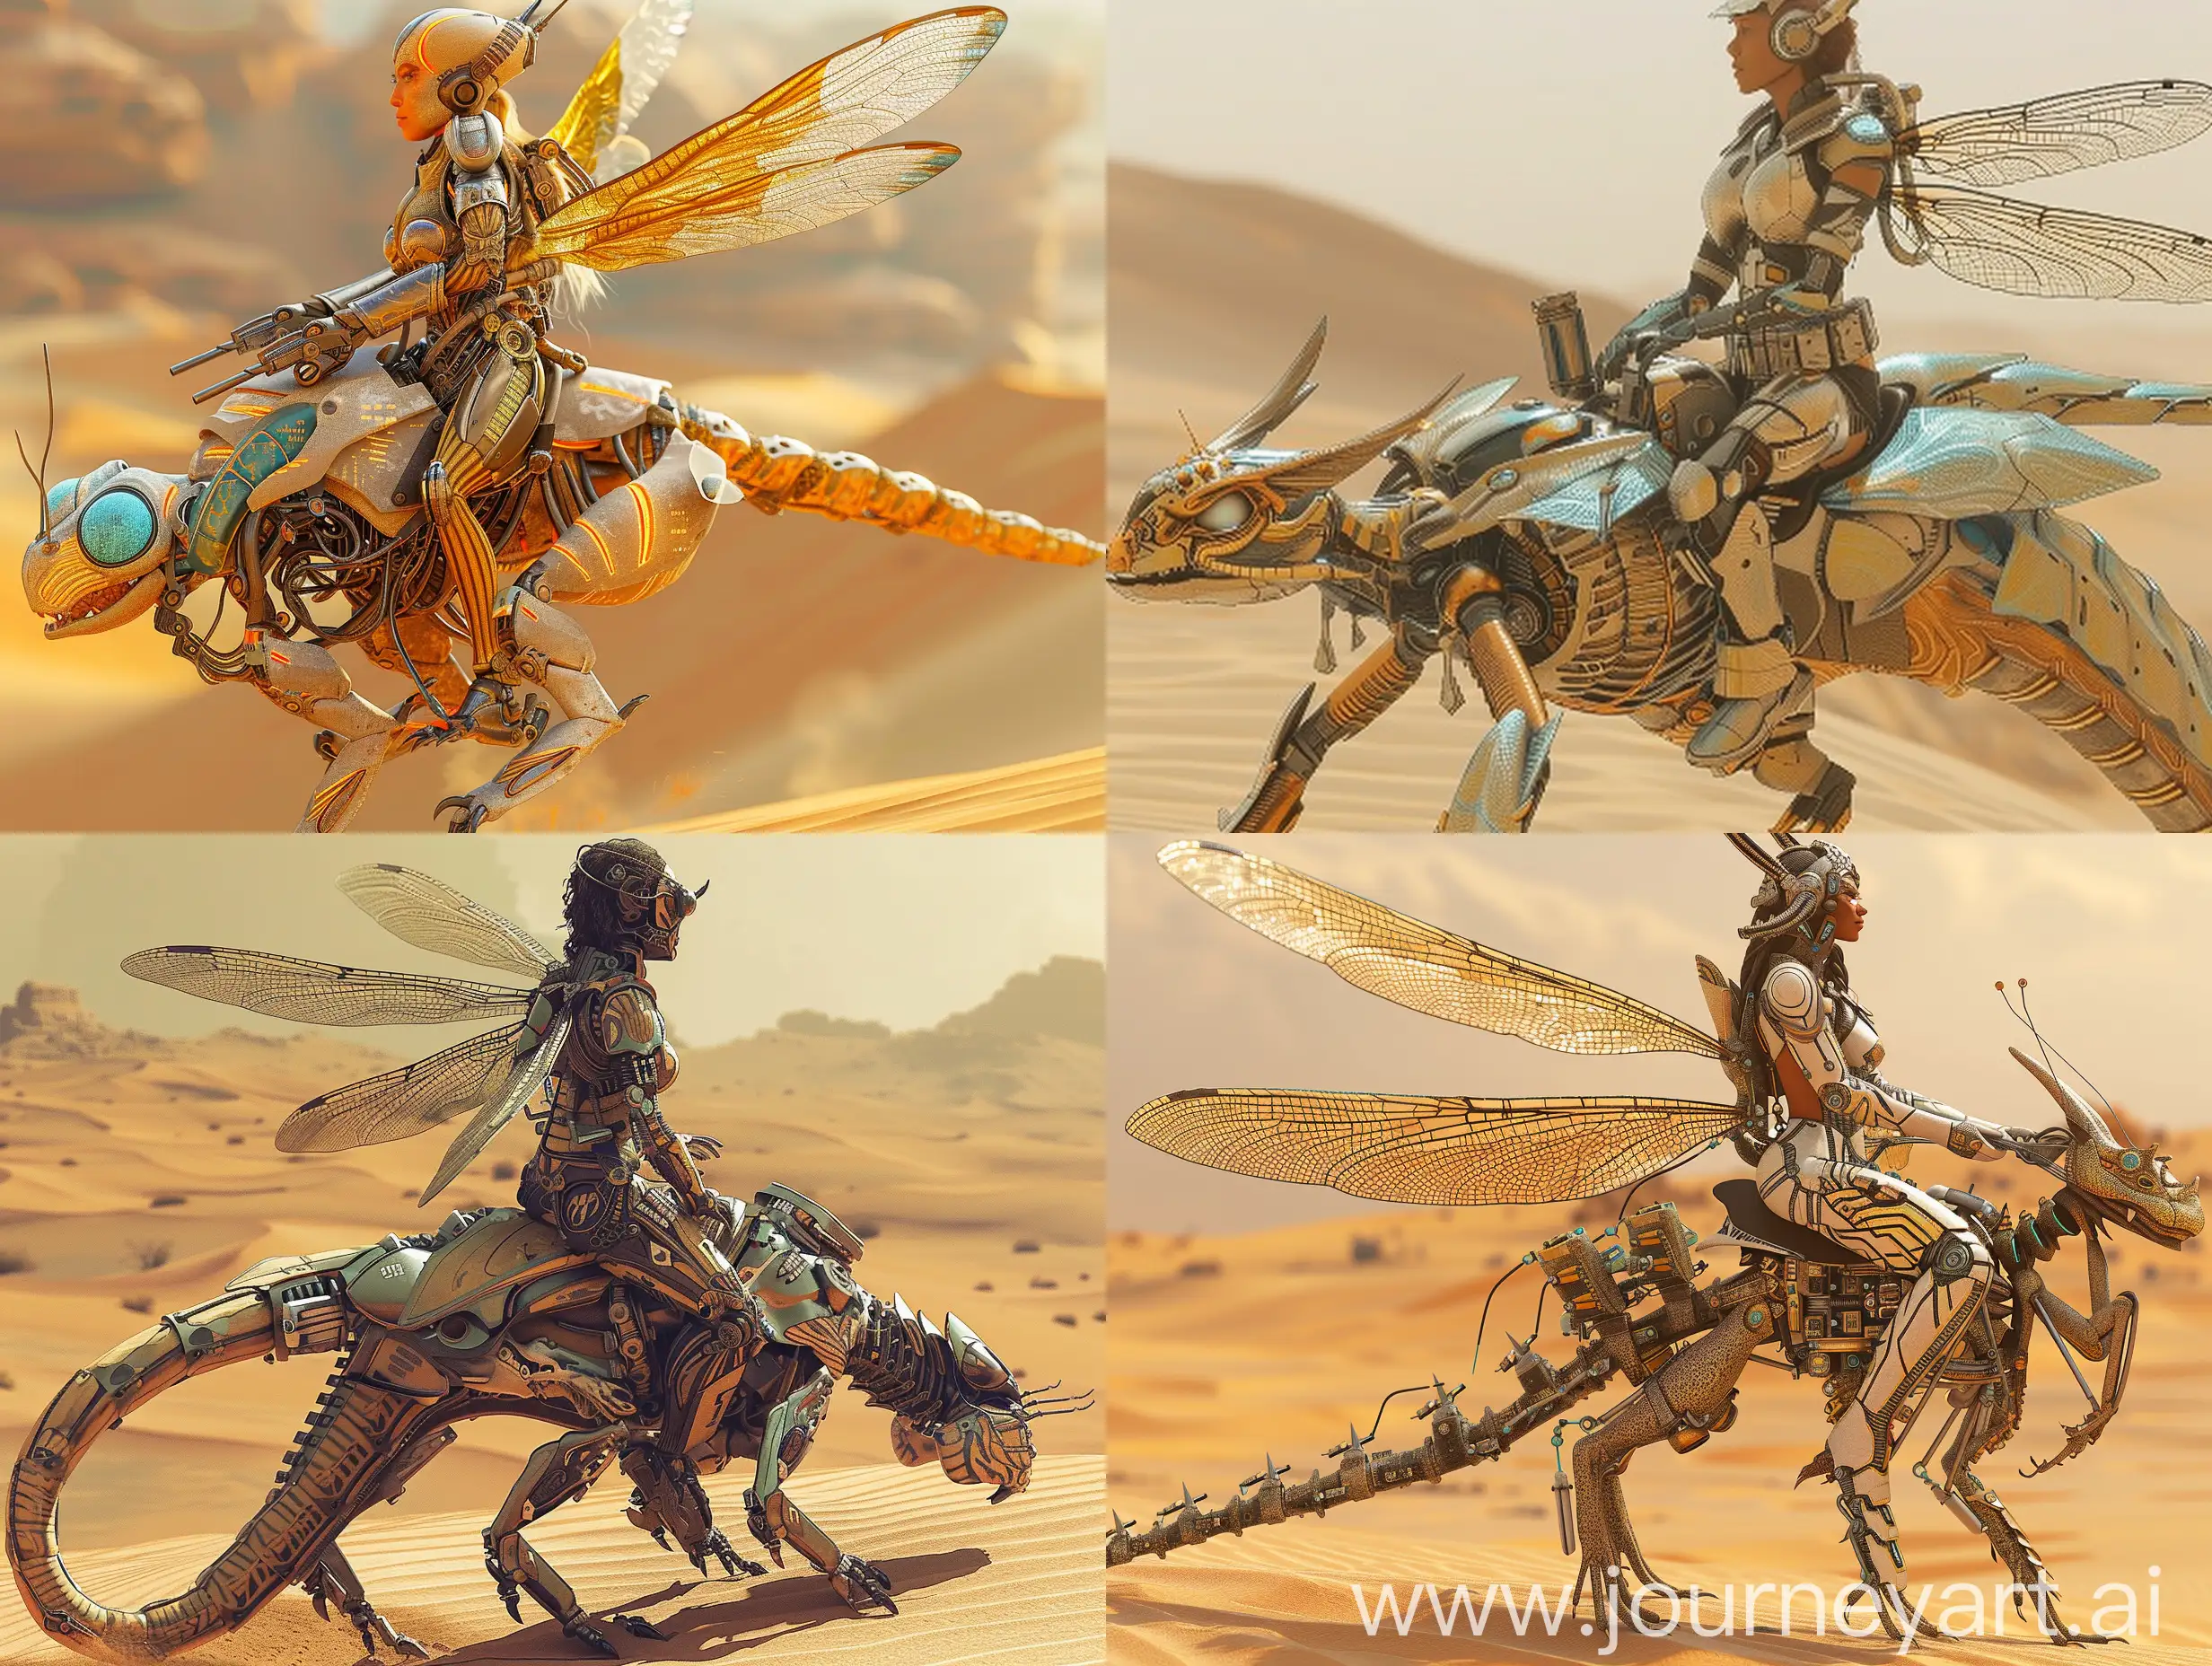 Anthropomorphic-Dragonfly-Goddess-Riding-Biotech-Dragon-in-Mars-Desert